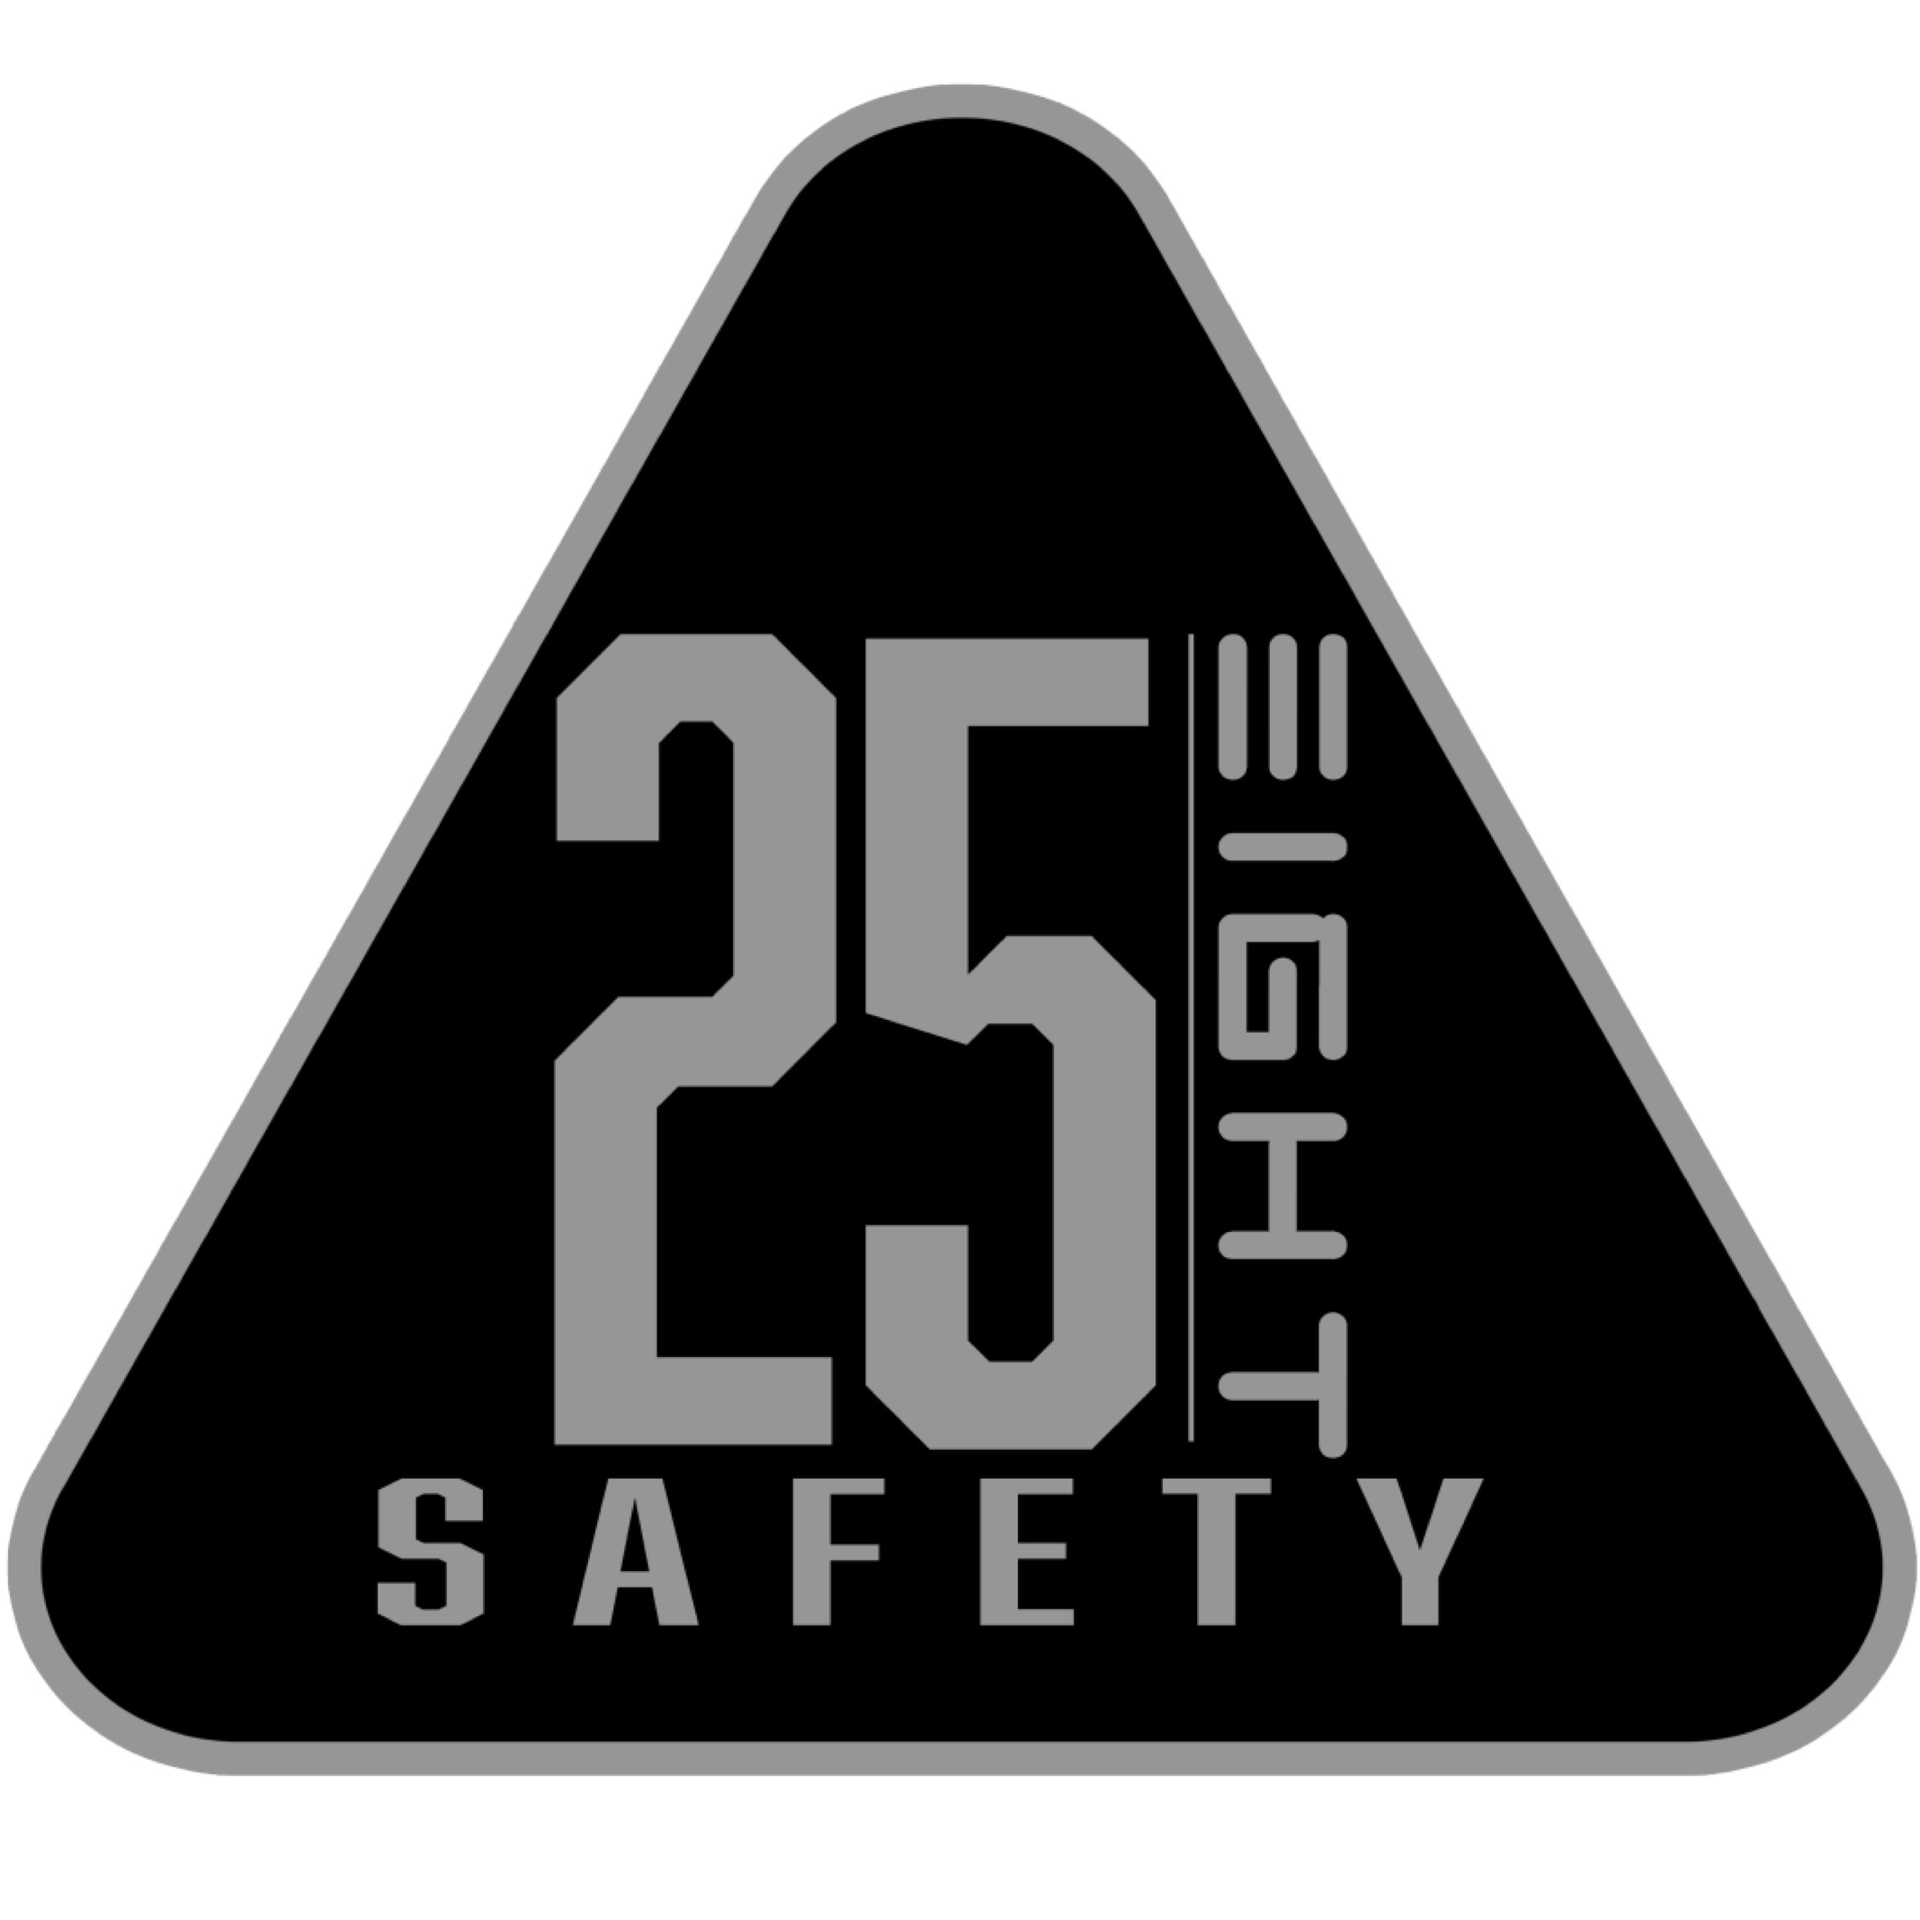 25/8 Safety